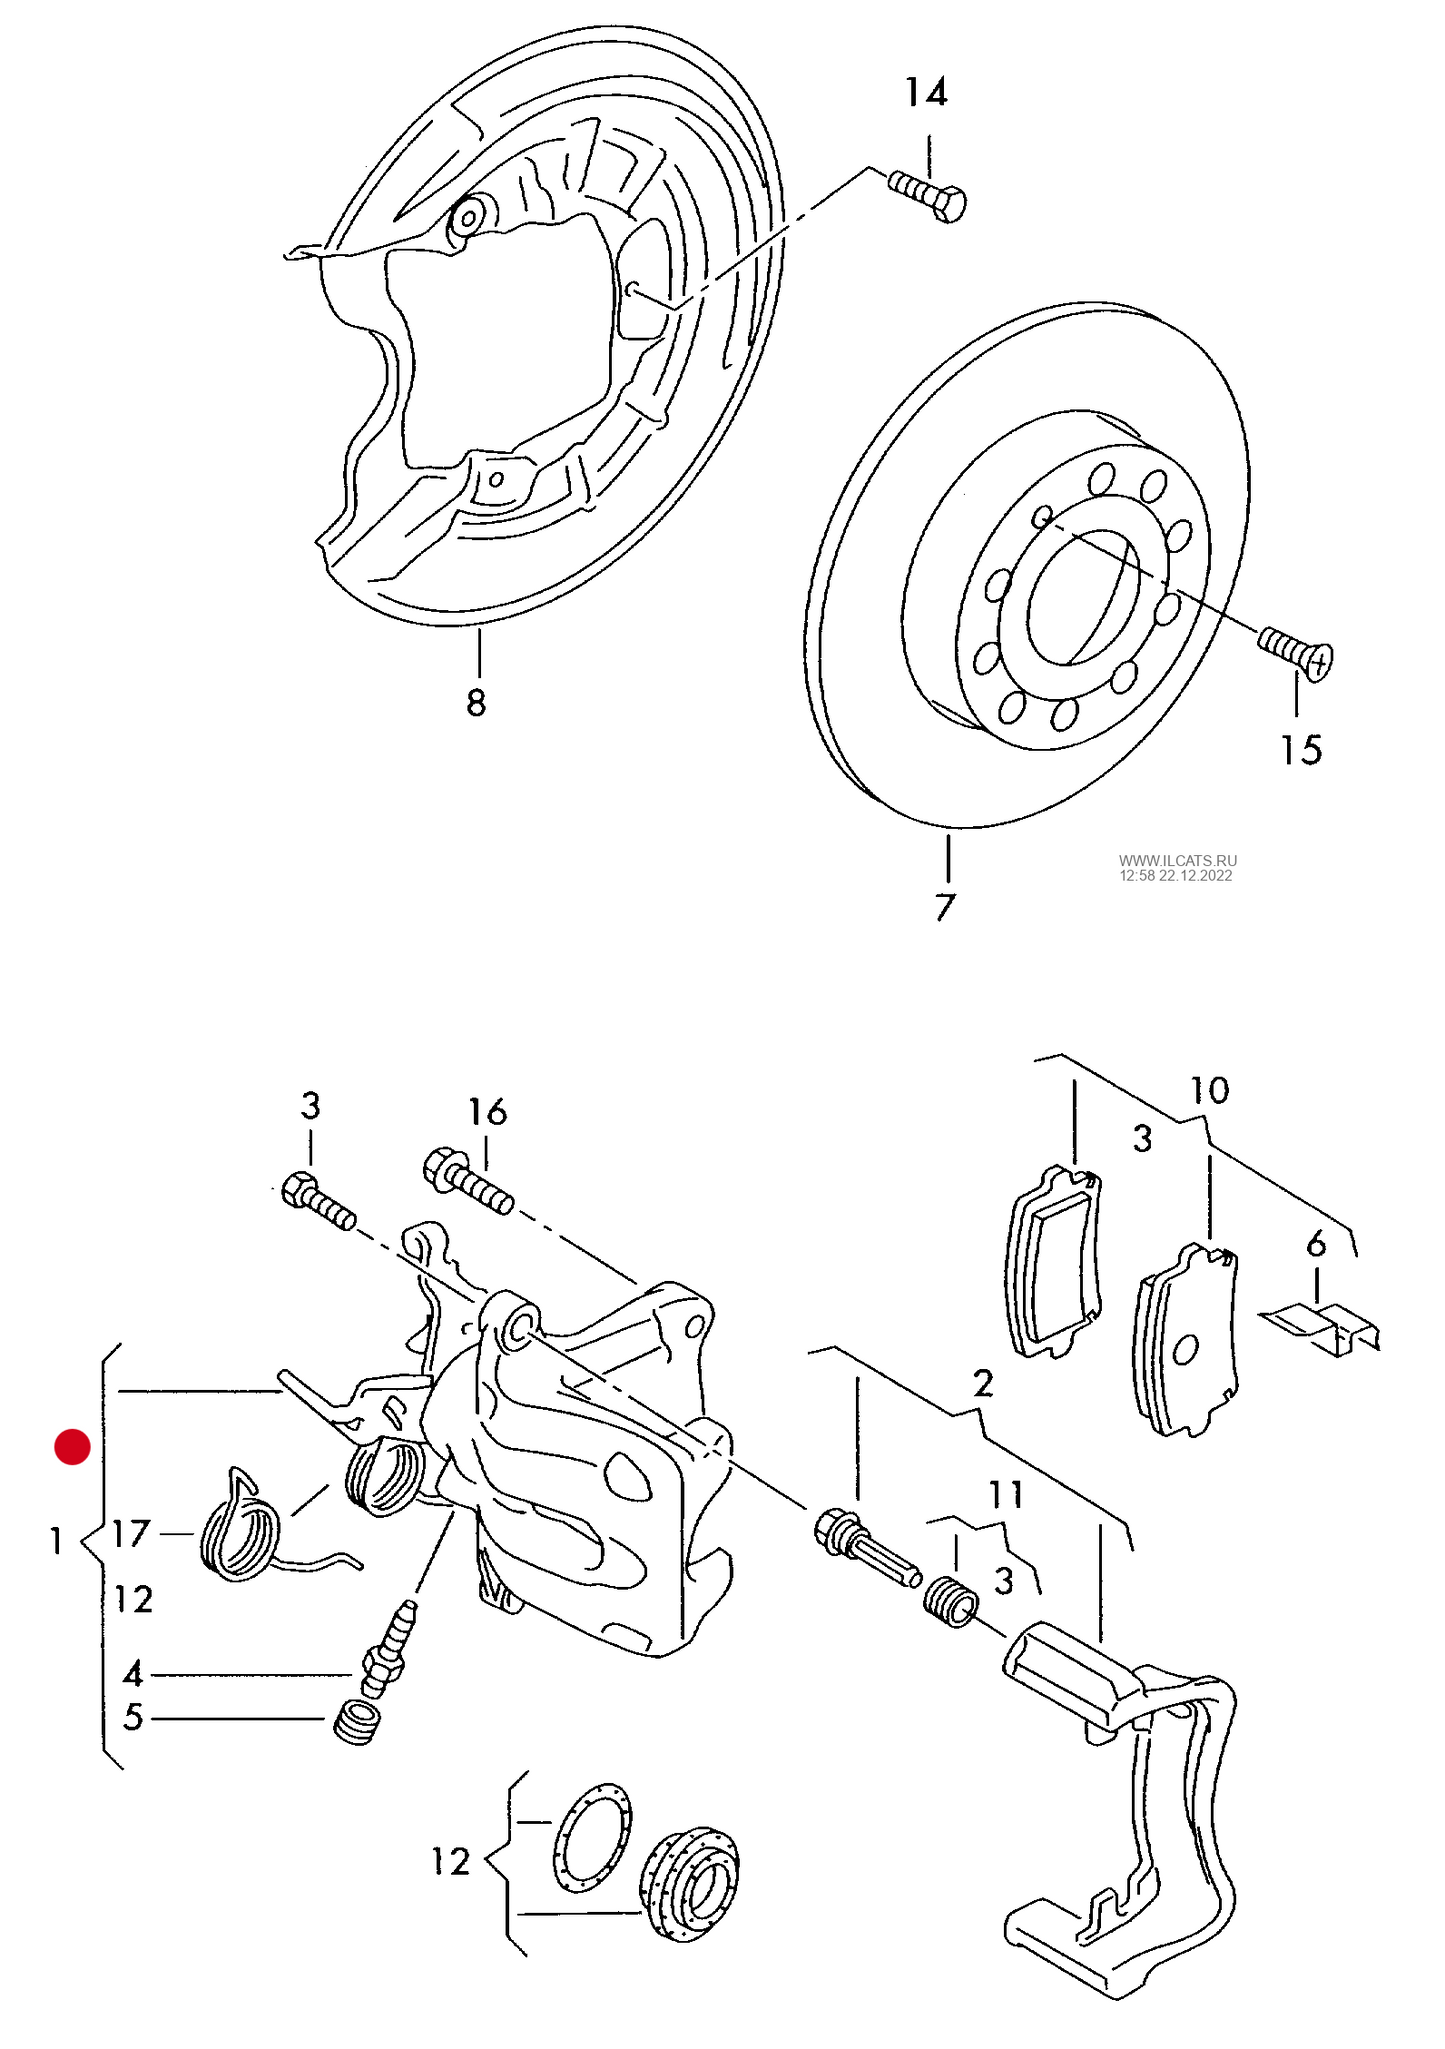 (1) 178963 TRW R/H New Rear brake caliper (BLACK) 270bhp PR-1KW